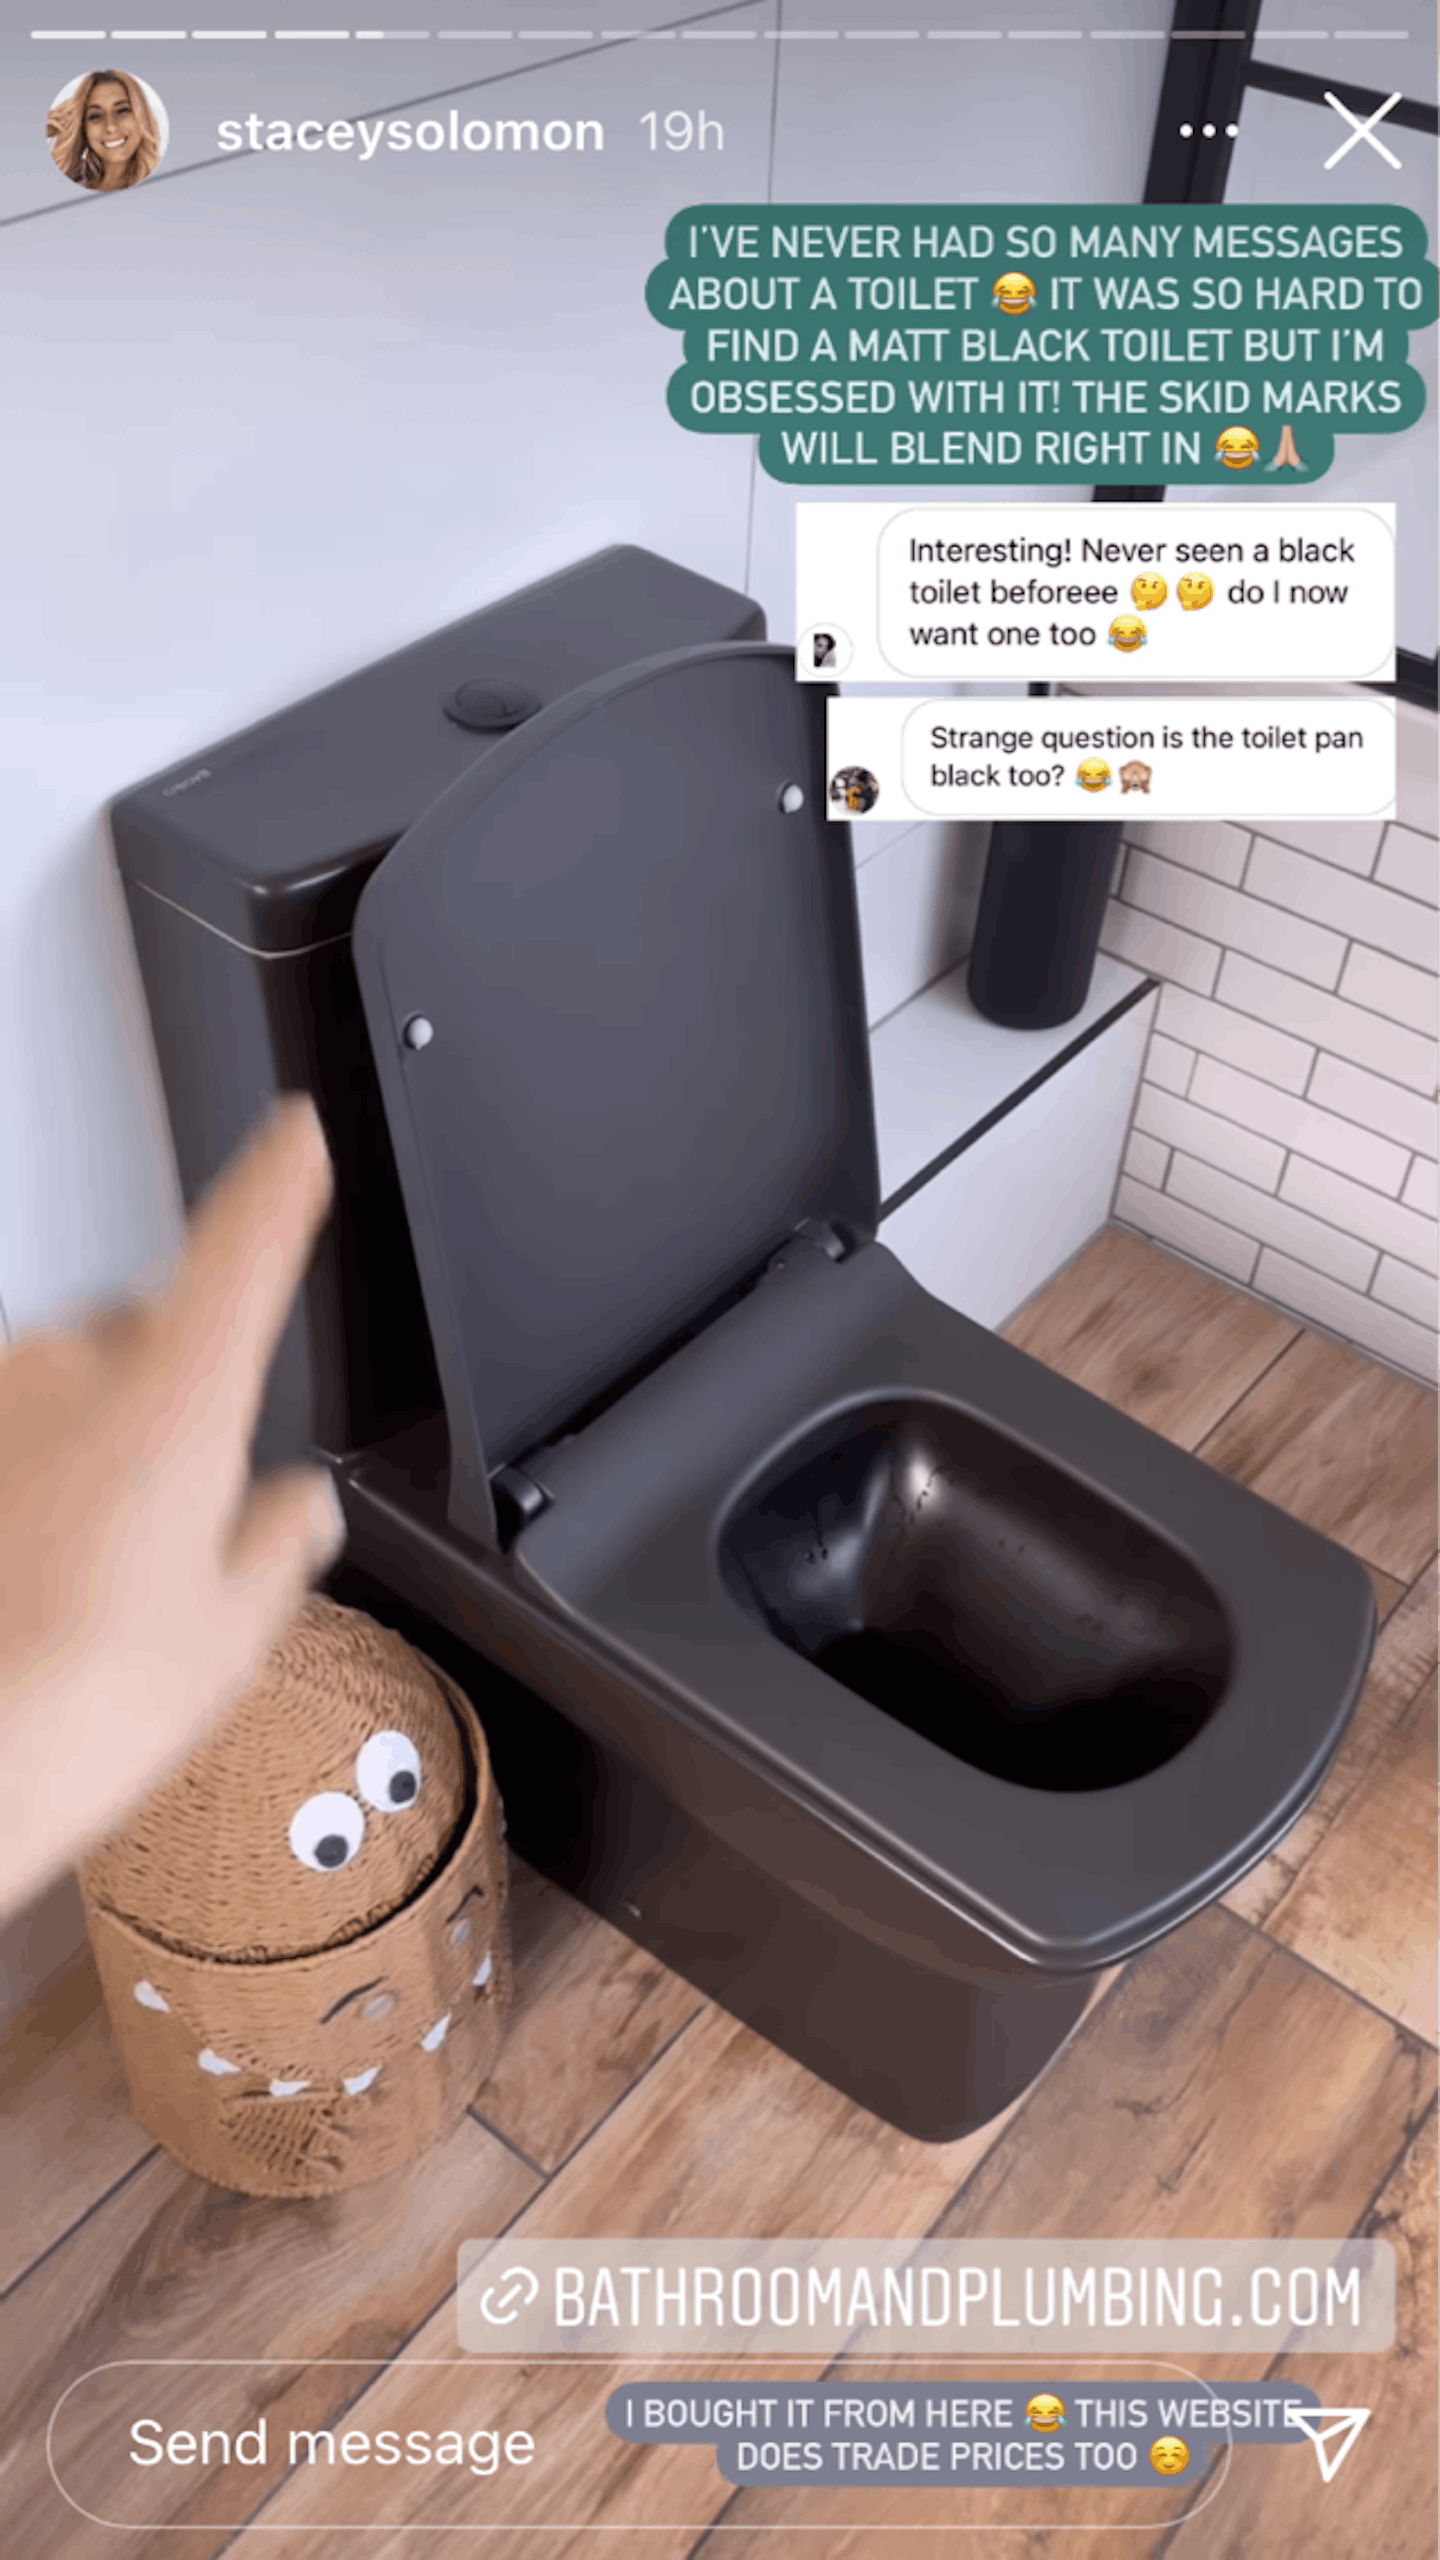 Stacey Solomon's black toilet